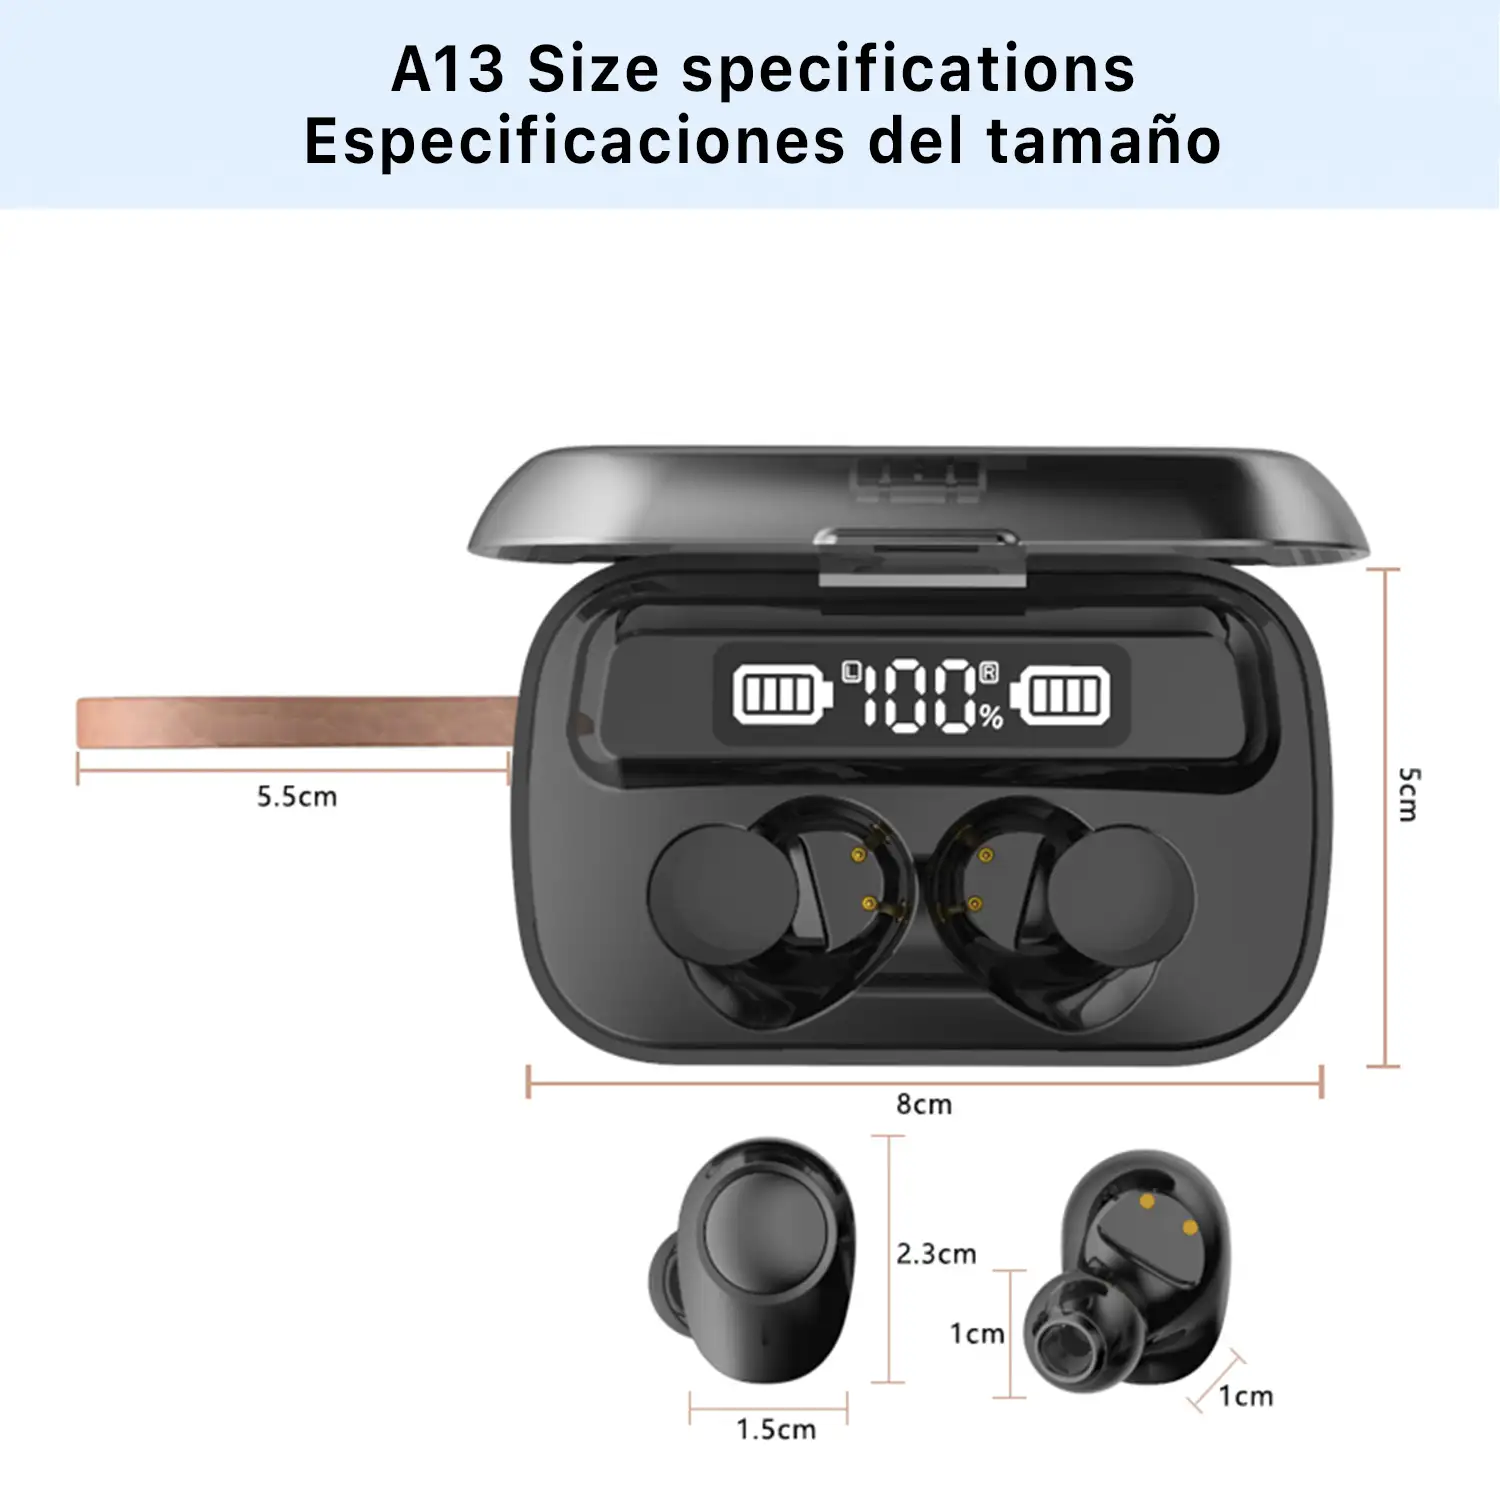 Auriculares TWS A13 Bluetooth 5.1 táctil.Base de carga powerbank con indicador de carga y reloj digital.